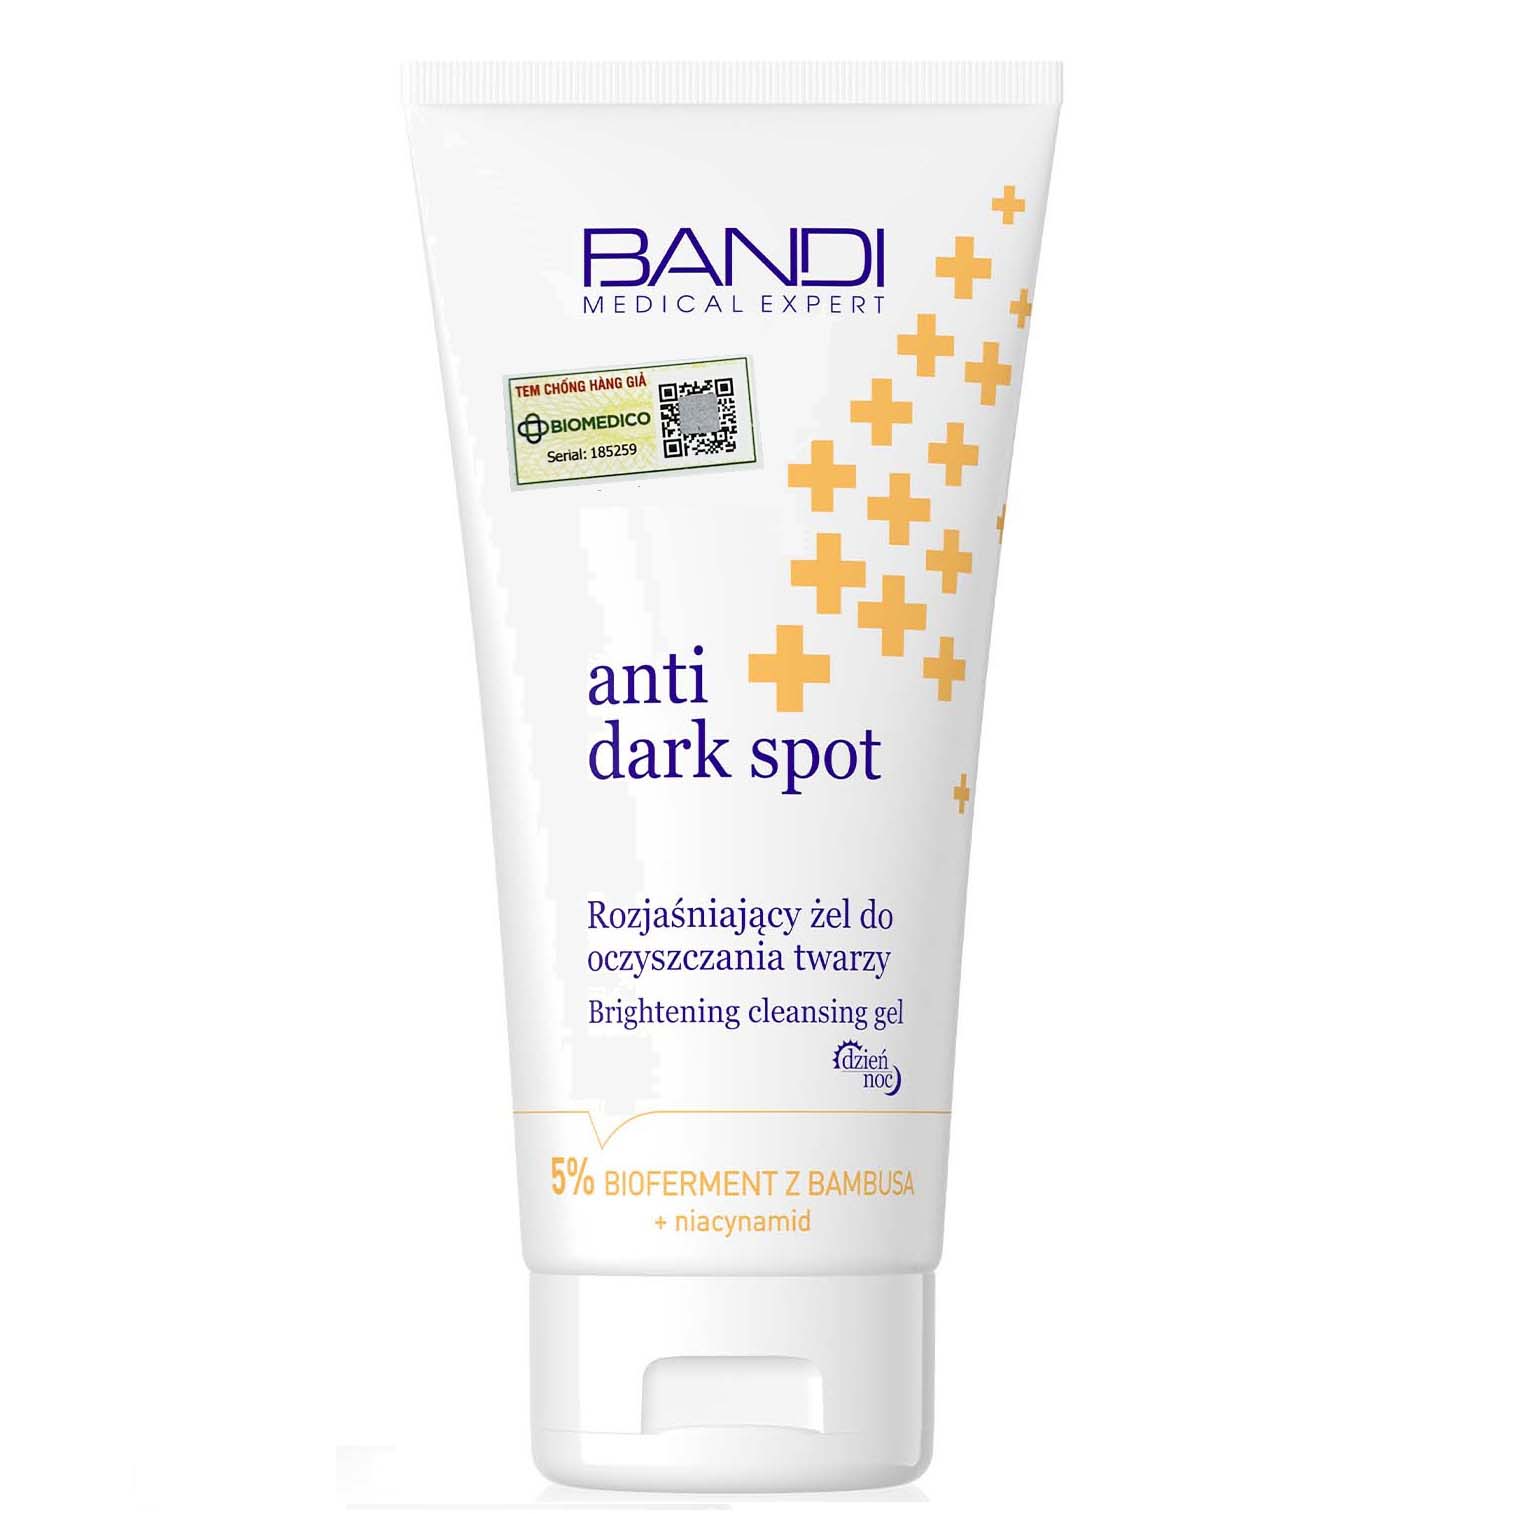 Gel rửa mặt sáng da Bandi Cleansing Gel anti dark spot brightening